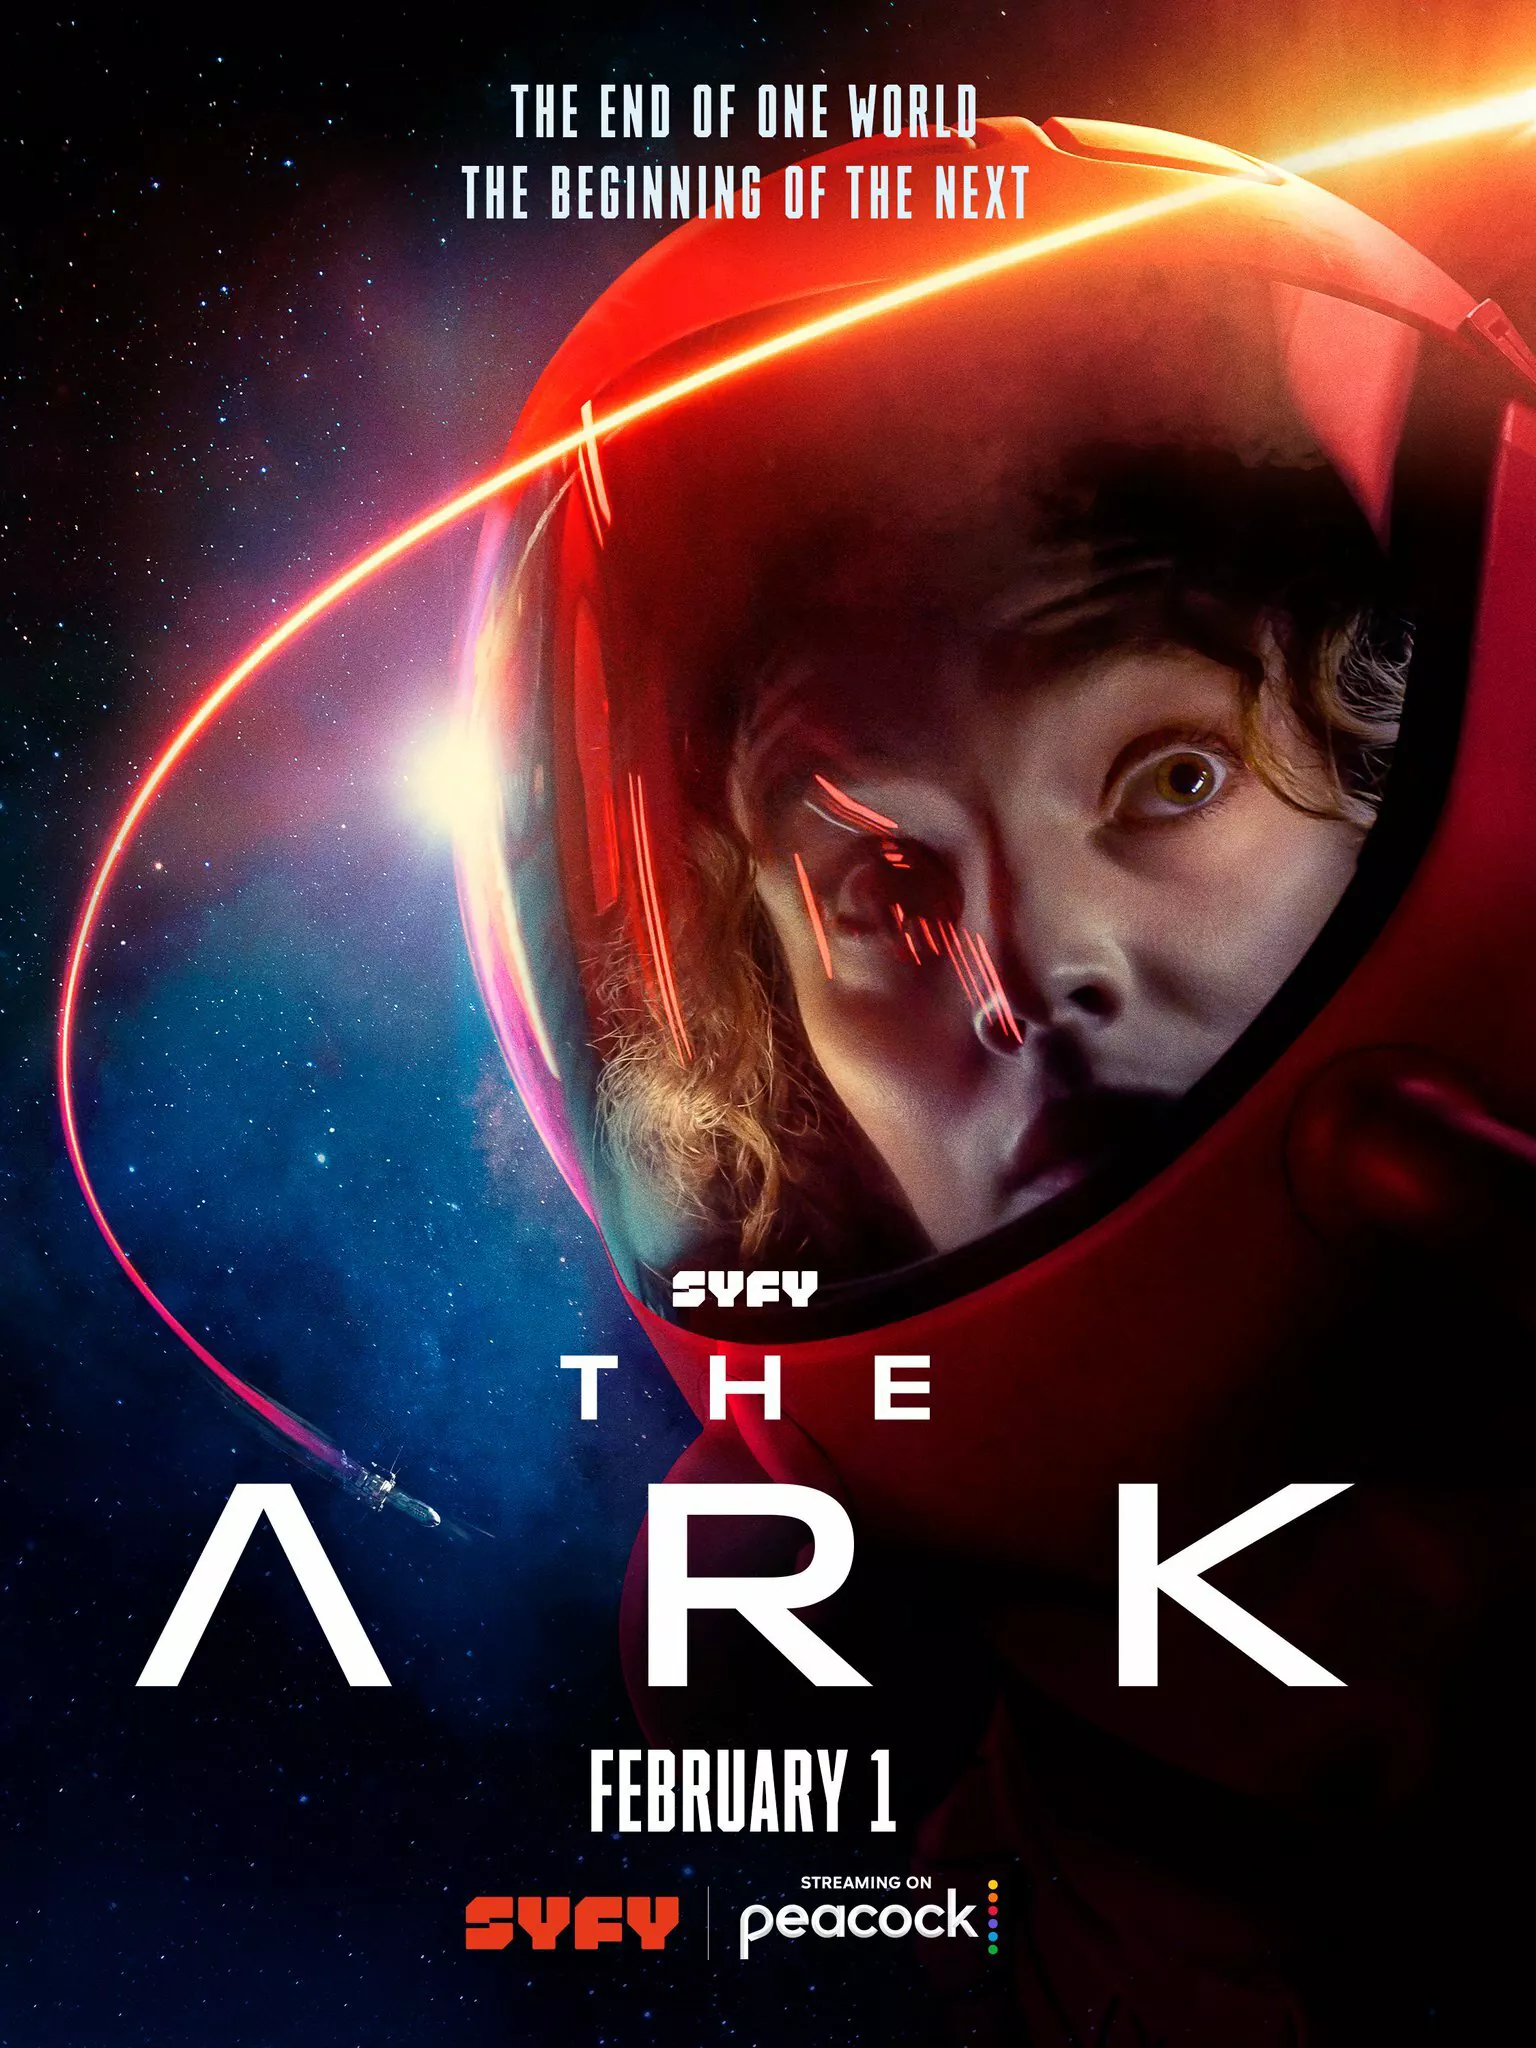 Trailer Από Τη Νέα Sci-Fi Σειρά "The Ark"